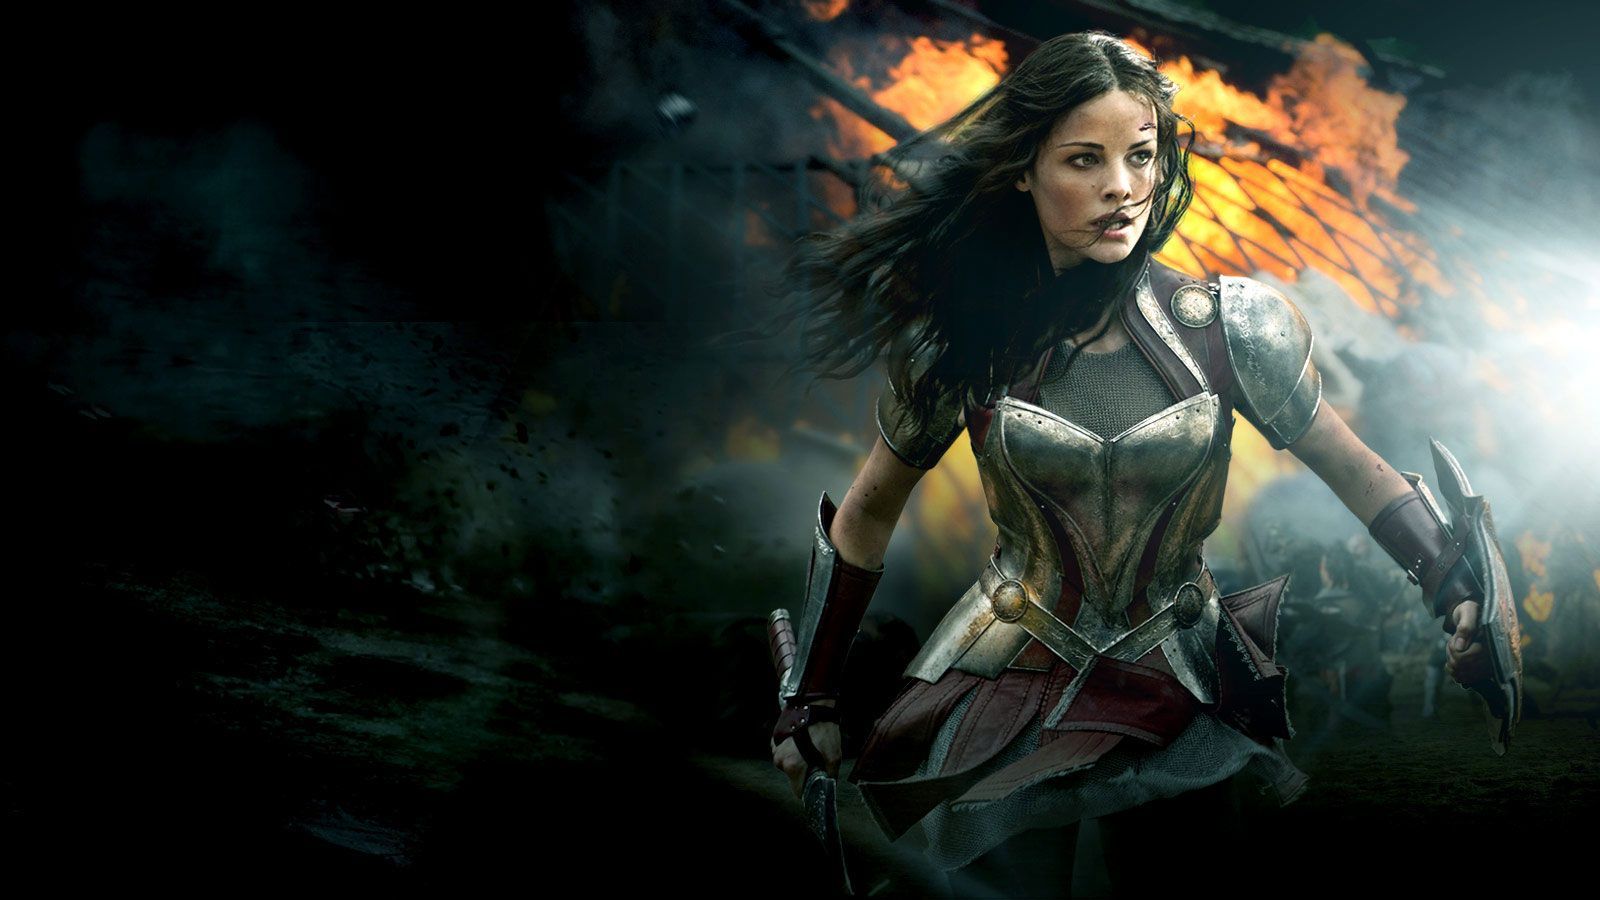 Thor 2 The Dark World 2013 Movie Wallpaper HD & Facebook Covers. Lady sif, Jaimie alexander, Female superhero